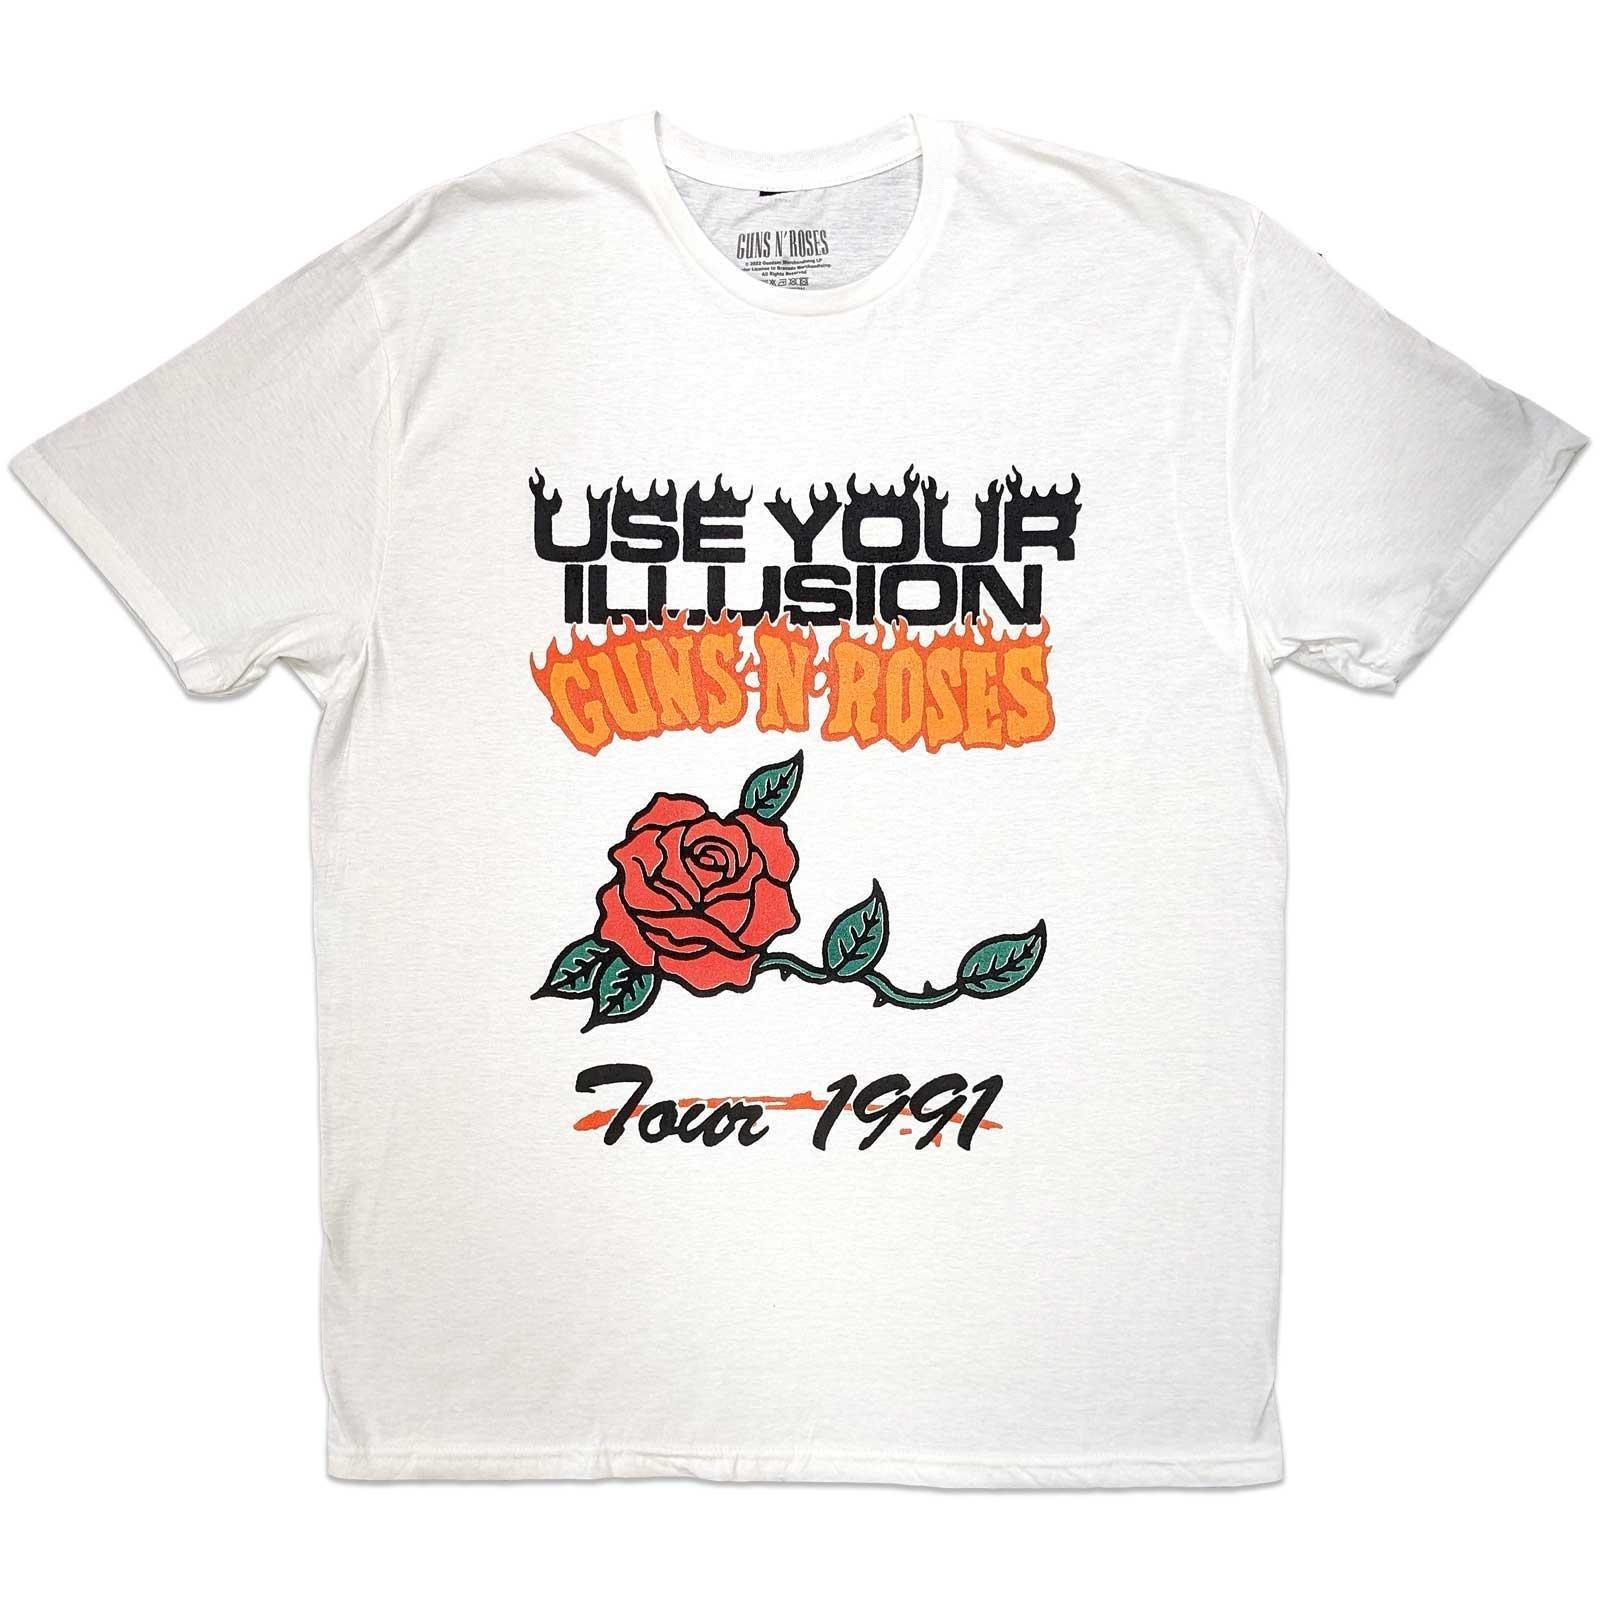 Use Your Illusion Tour 1991 Tshirt Damen Weiss S von Guns N Roses